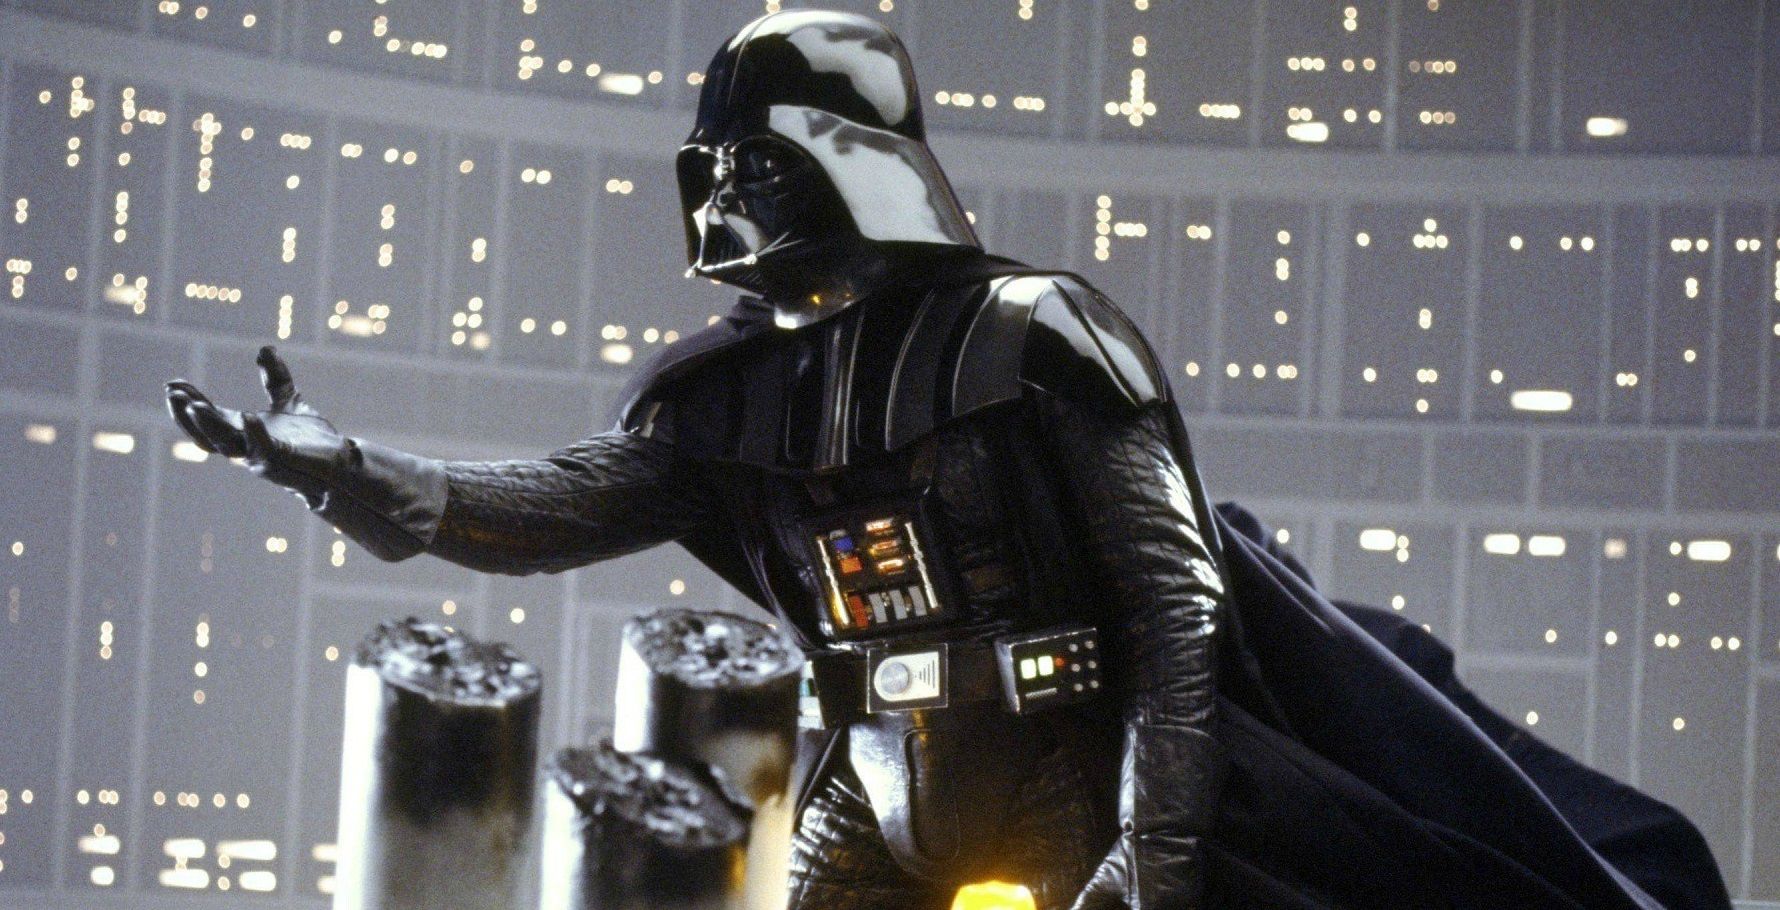 Darth Vader in The Empire Strikes Back